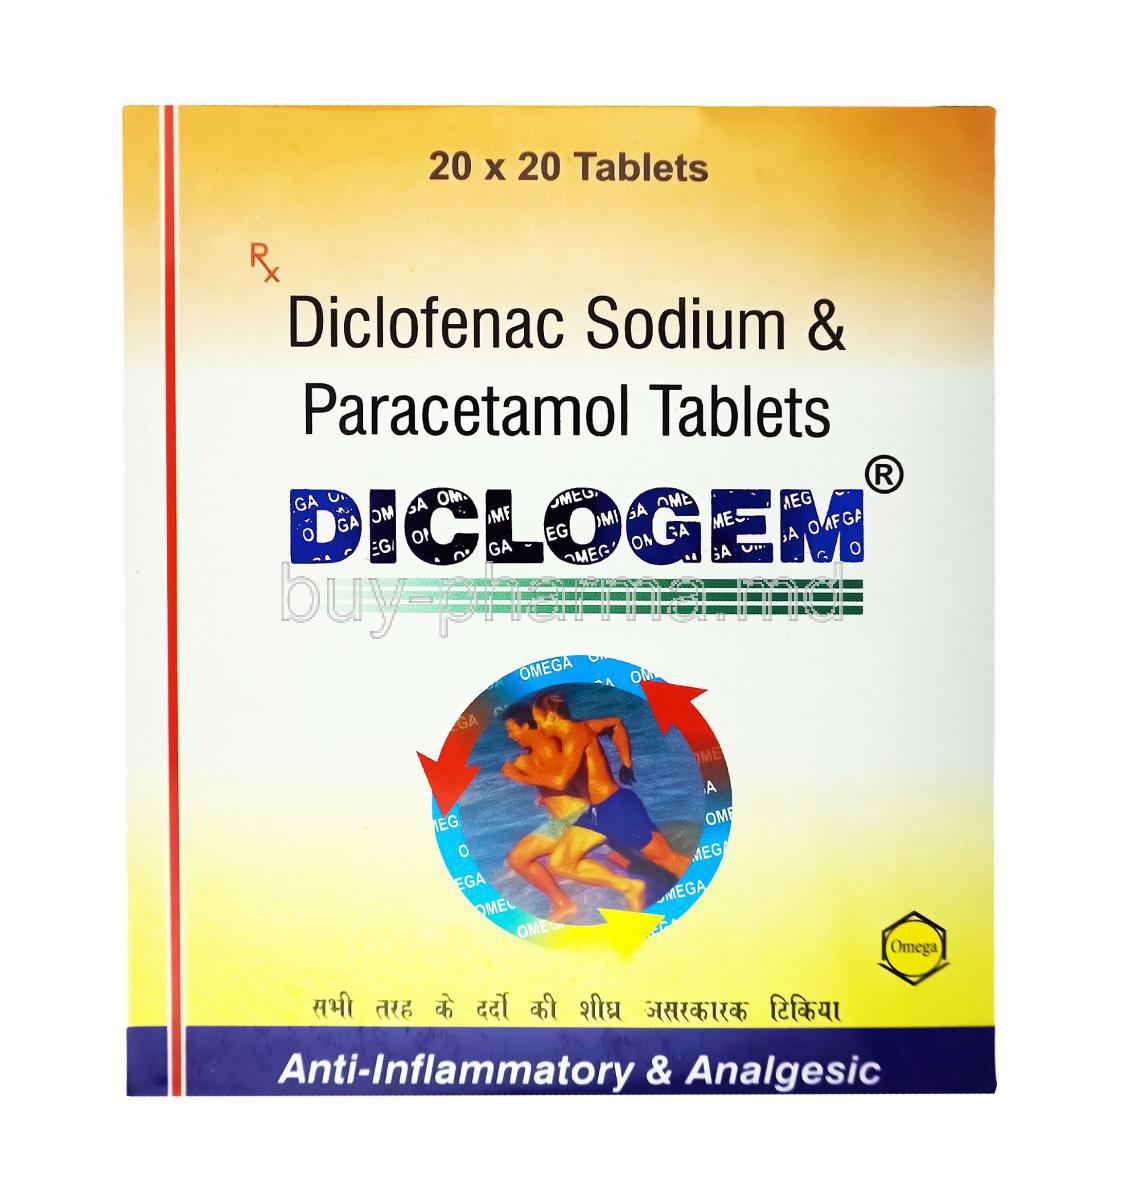 Diclogem, Diclofenac and Paracetamol